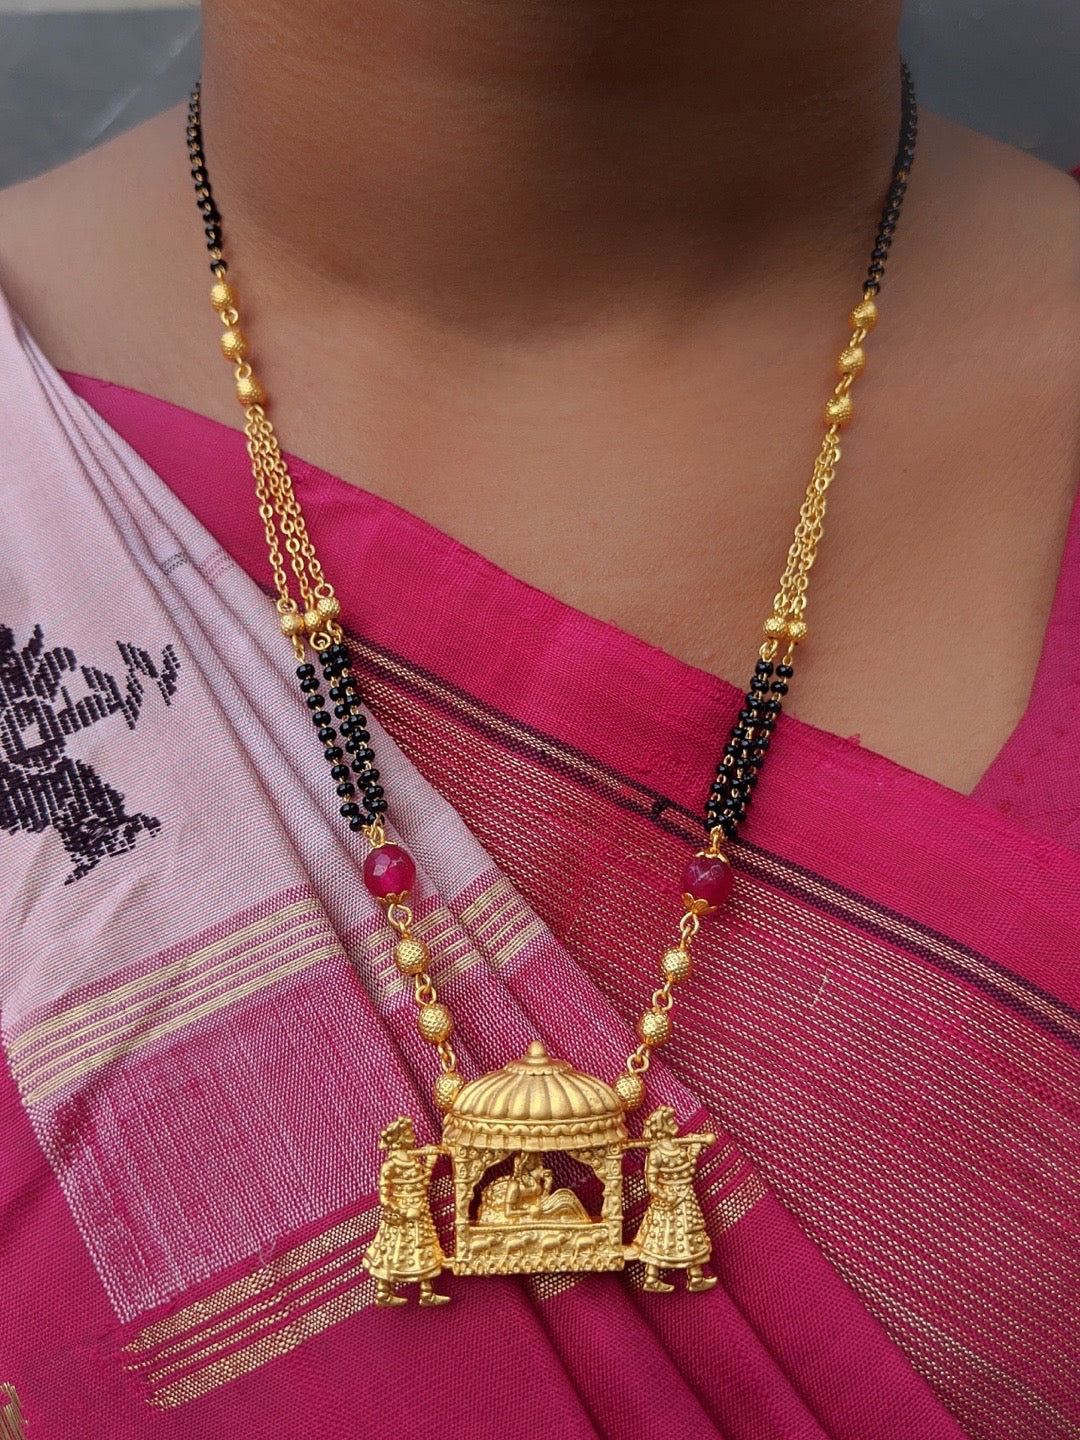 image for Short Mangalsutra Designs bridal on doli pendant bridal shaadi gold mangalsutra black beads chain